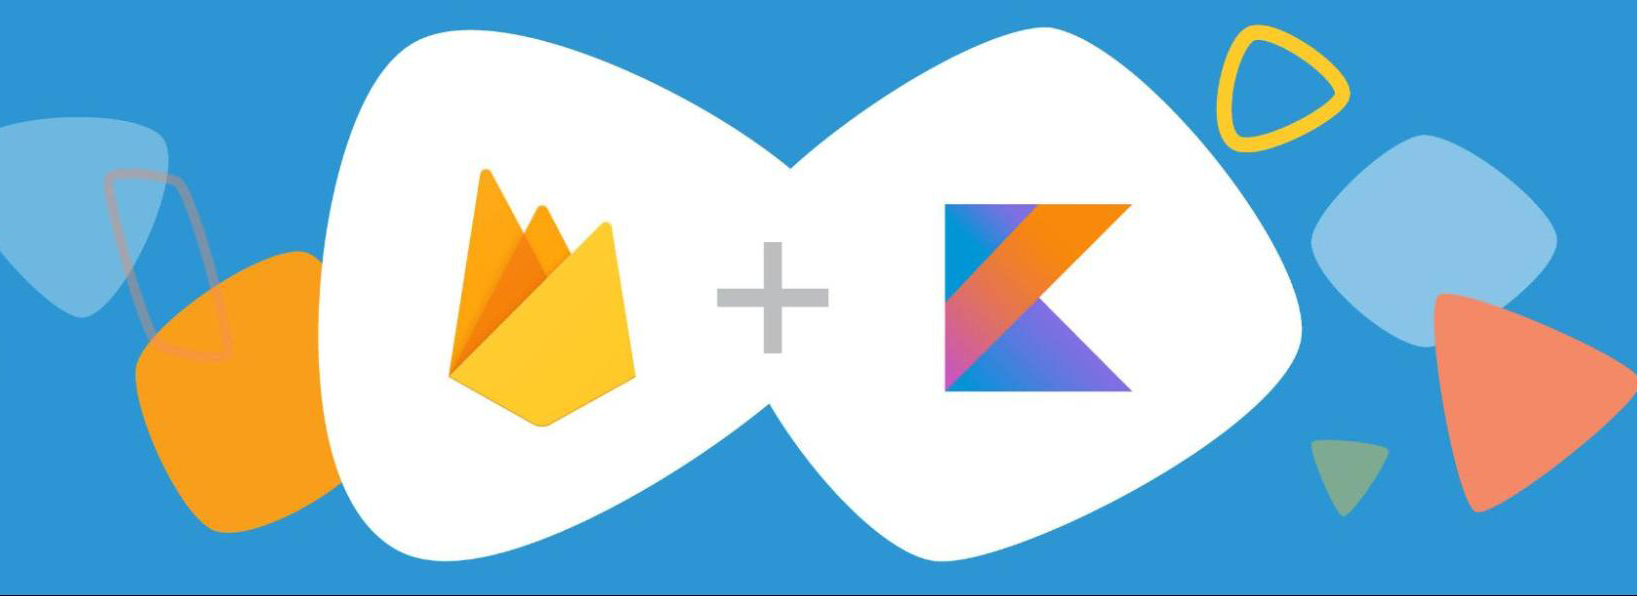 Firebase と Kotlin のロゴ